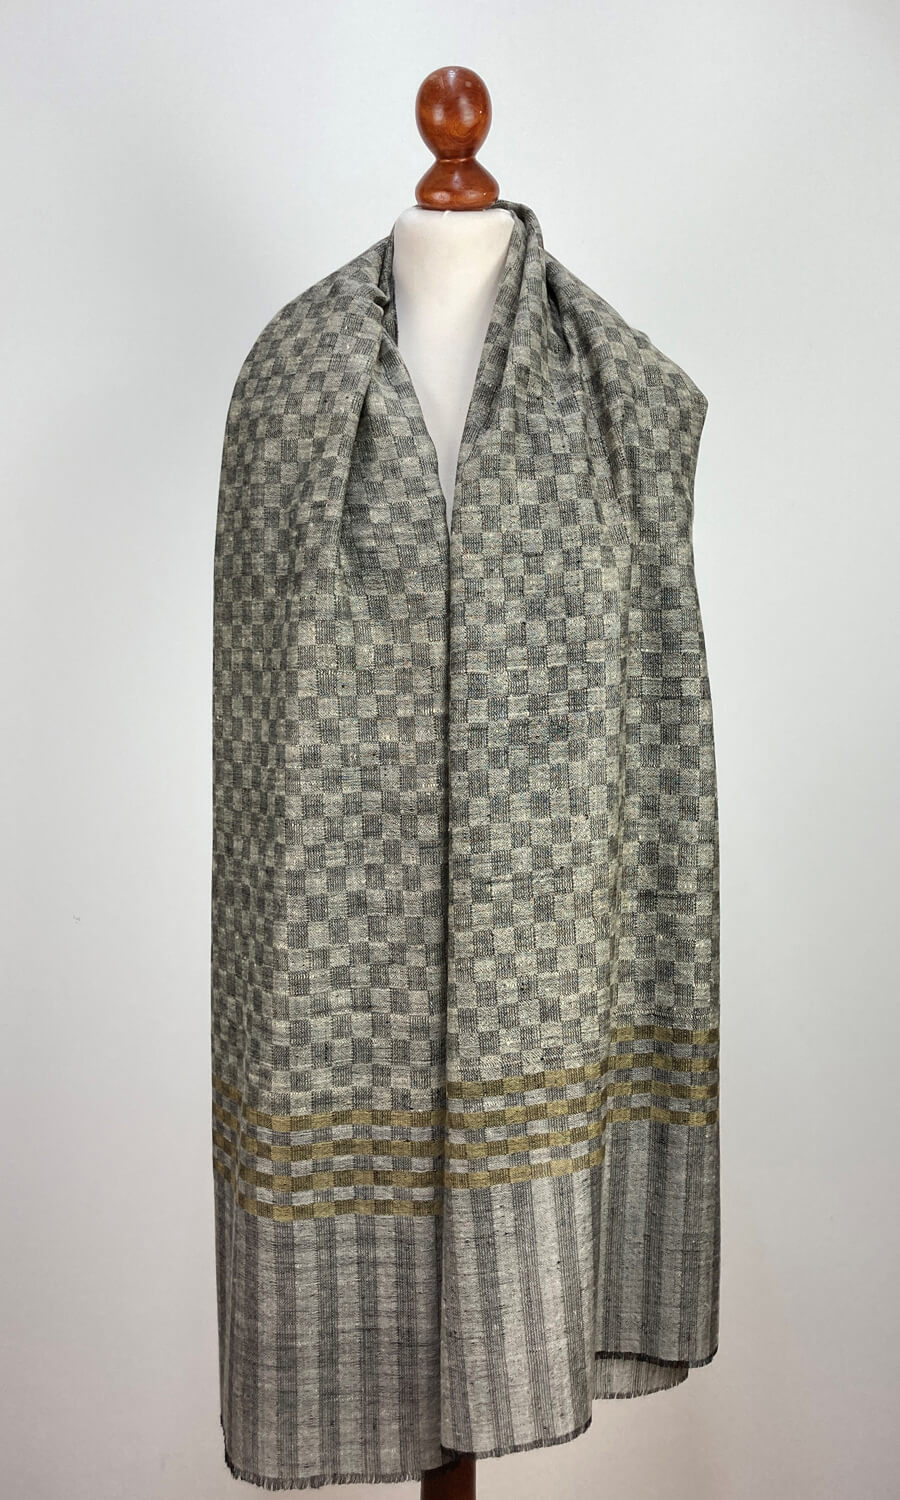 Mohini - großer handgewebter Schal aus Pashminawolle